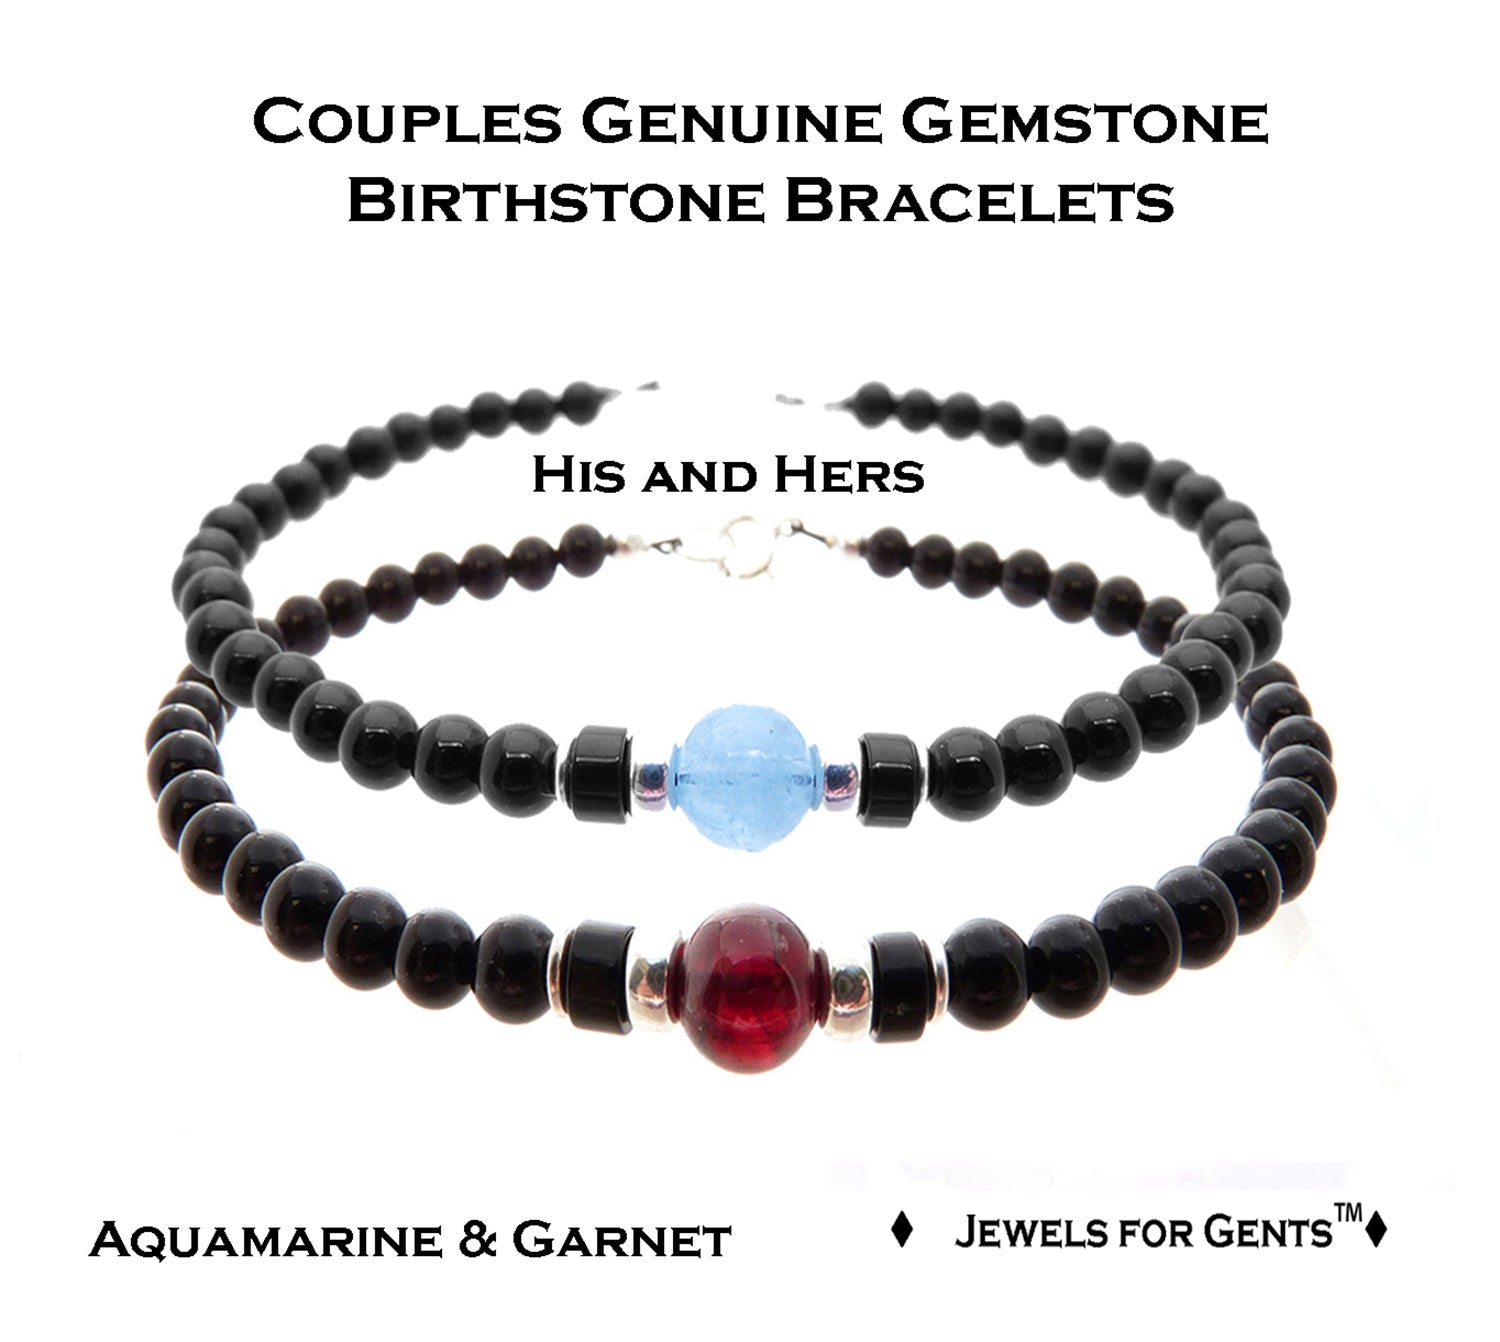 Silver Relationship Bracelets, Friendship Bracelets, Father & Son Bracelets, Couples Bracelets,  Matching Bracelets, Gemstone Birthstone Bracelets